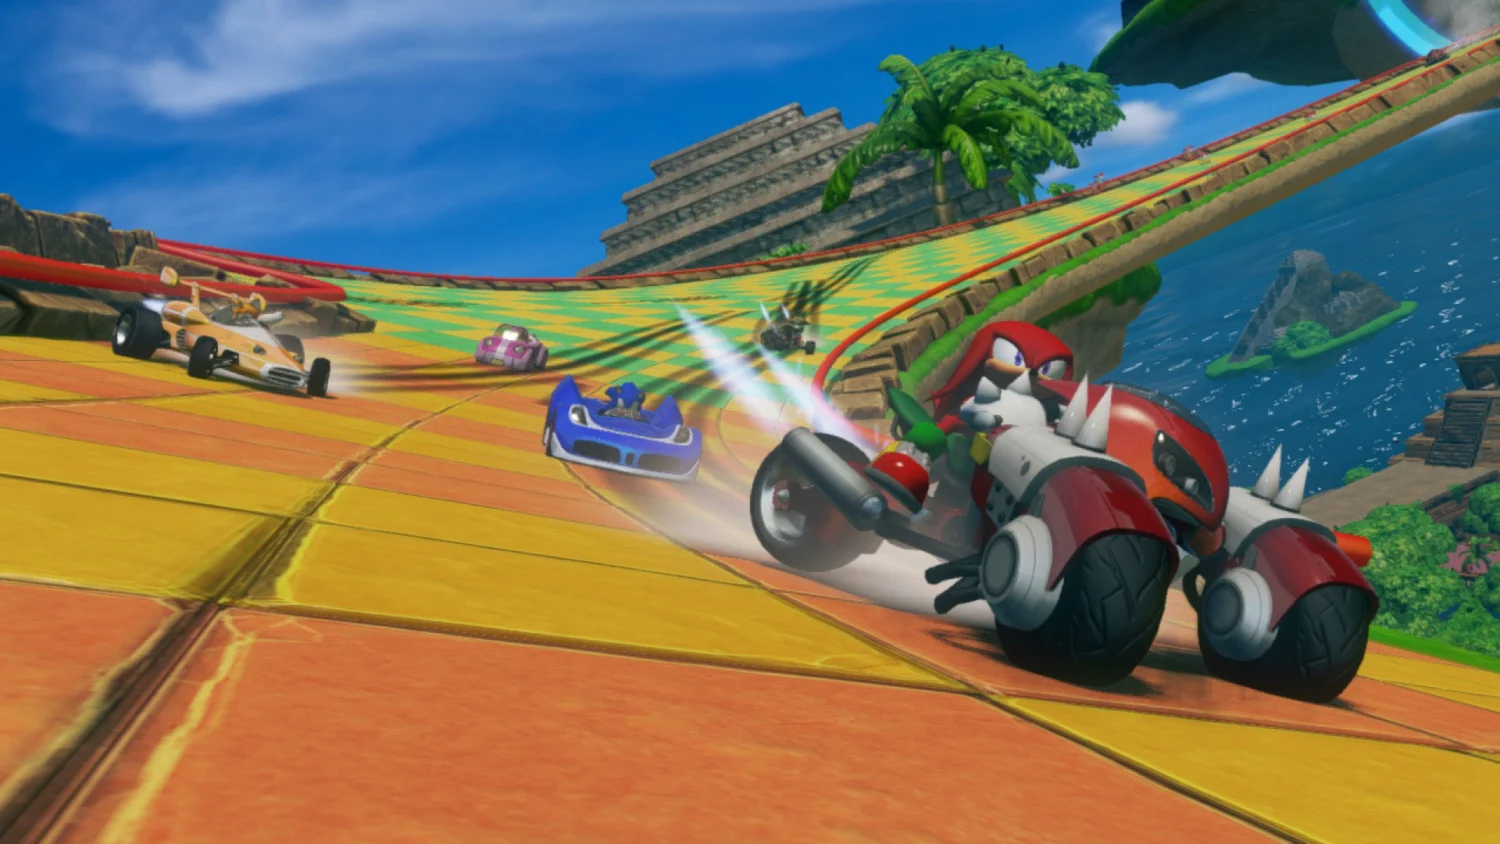 Jogo Sonic e Sega Racing All Stars PS3